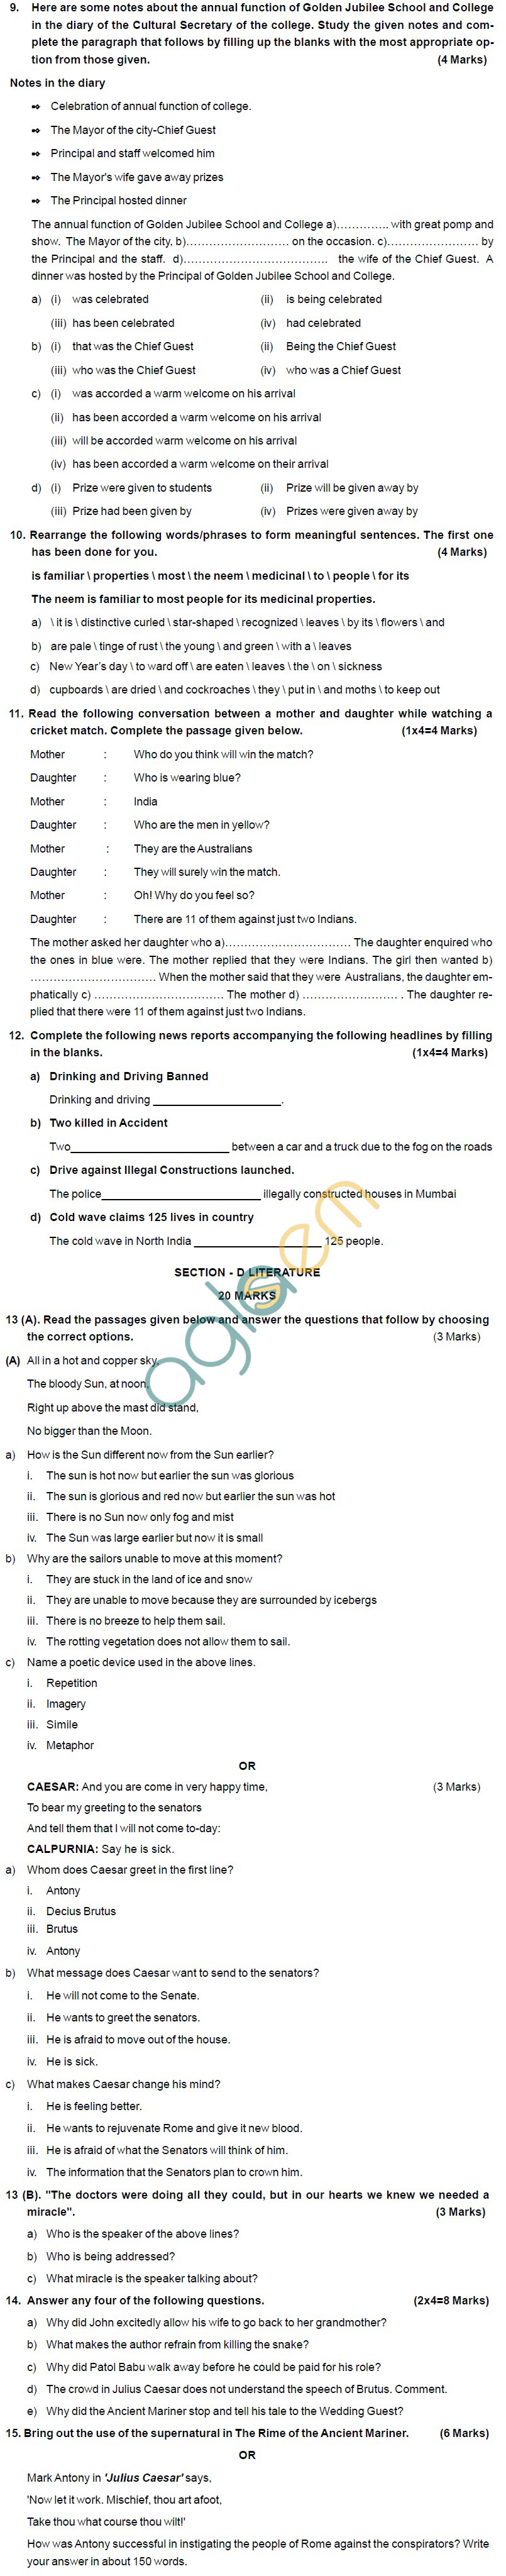 CBSE Board Exam 2013 Sample Papers (SA2) Class X - English Communicative